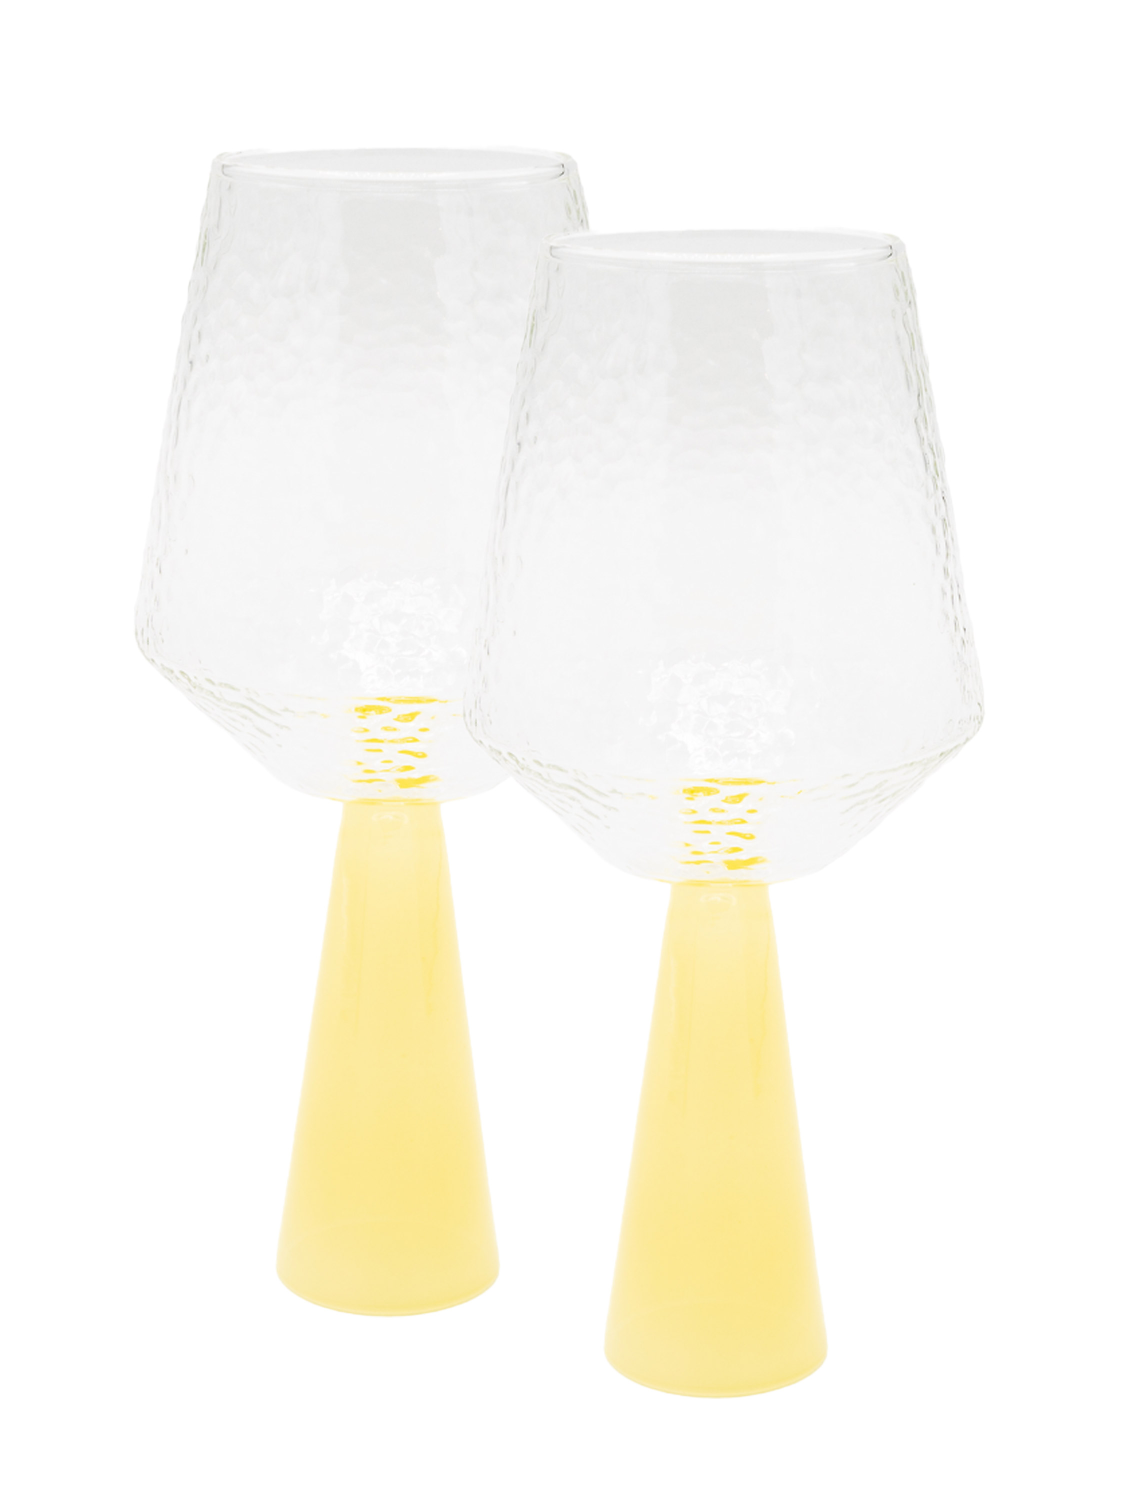 Yellow wine glass set by BRUT